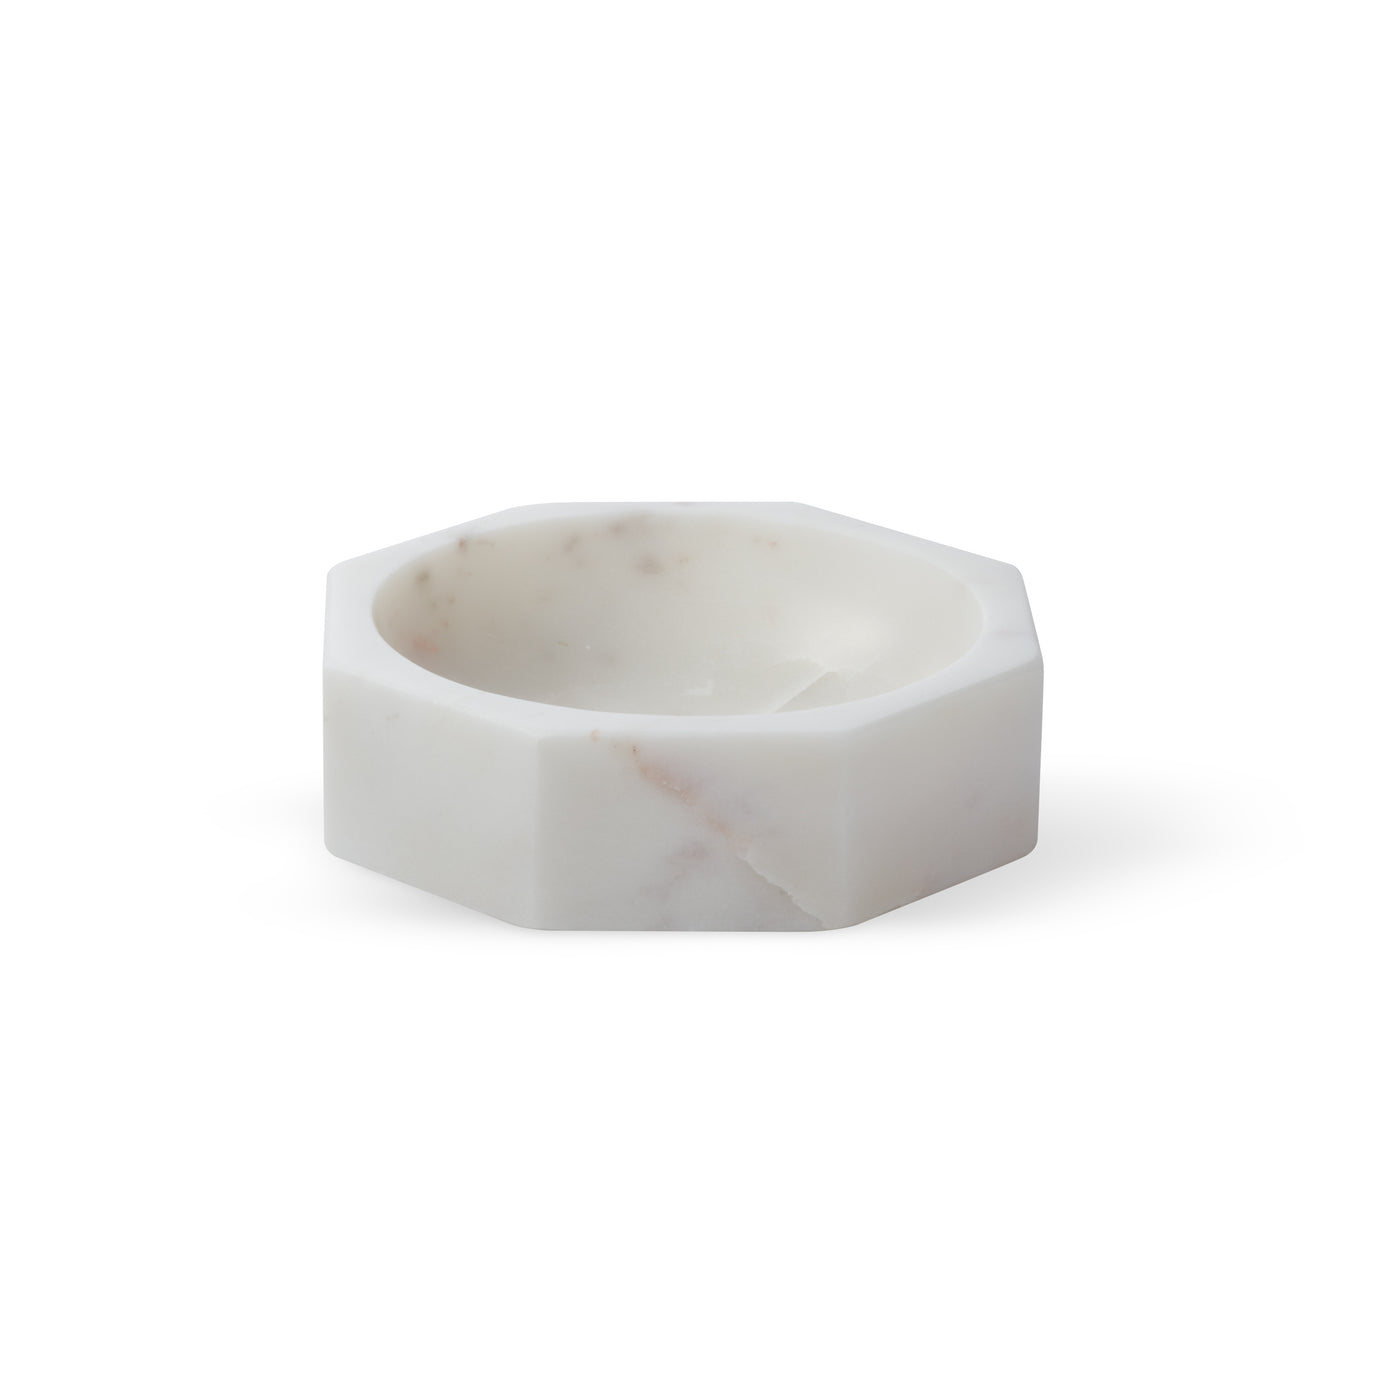 Marble Octangular Bowl: Medium in White